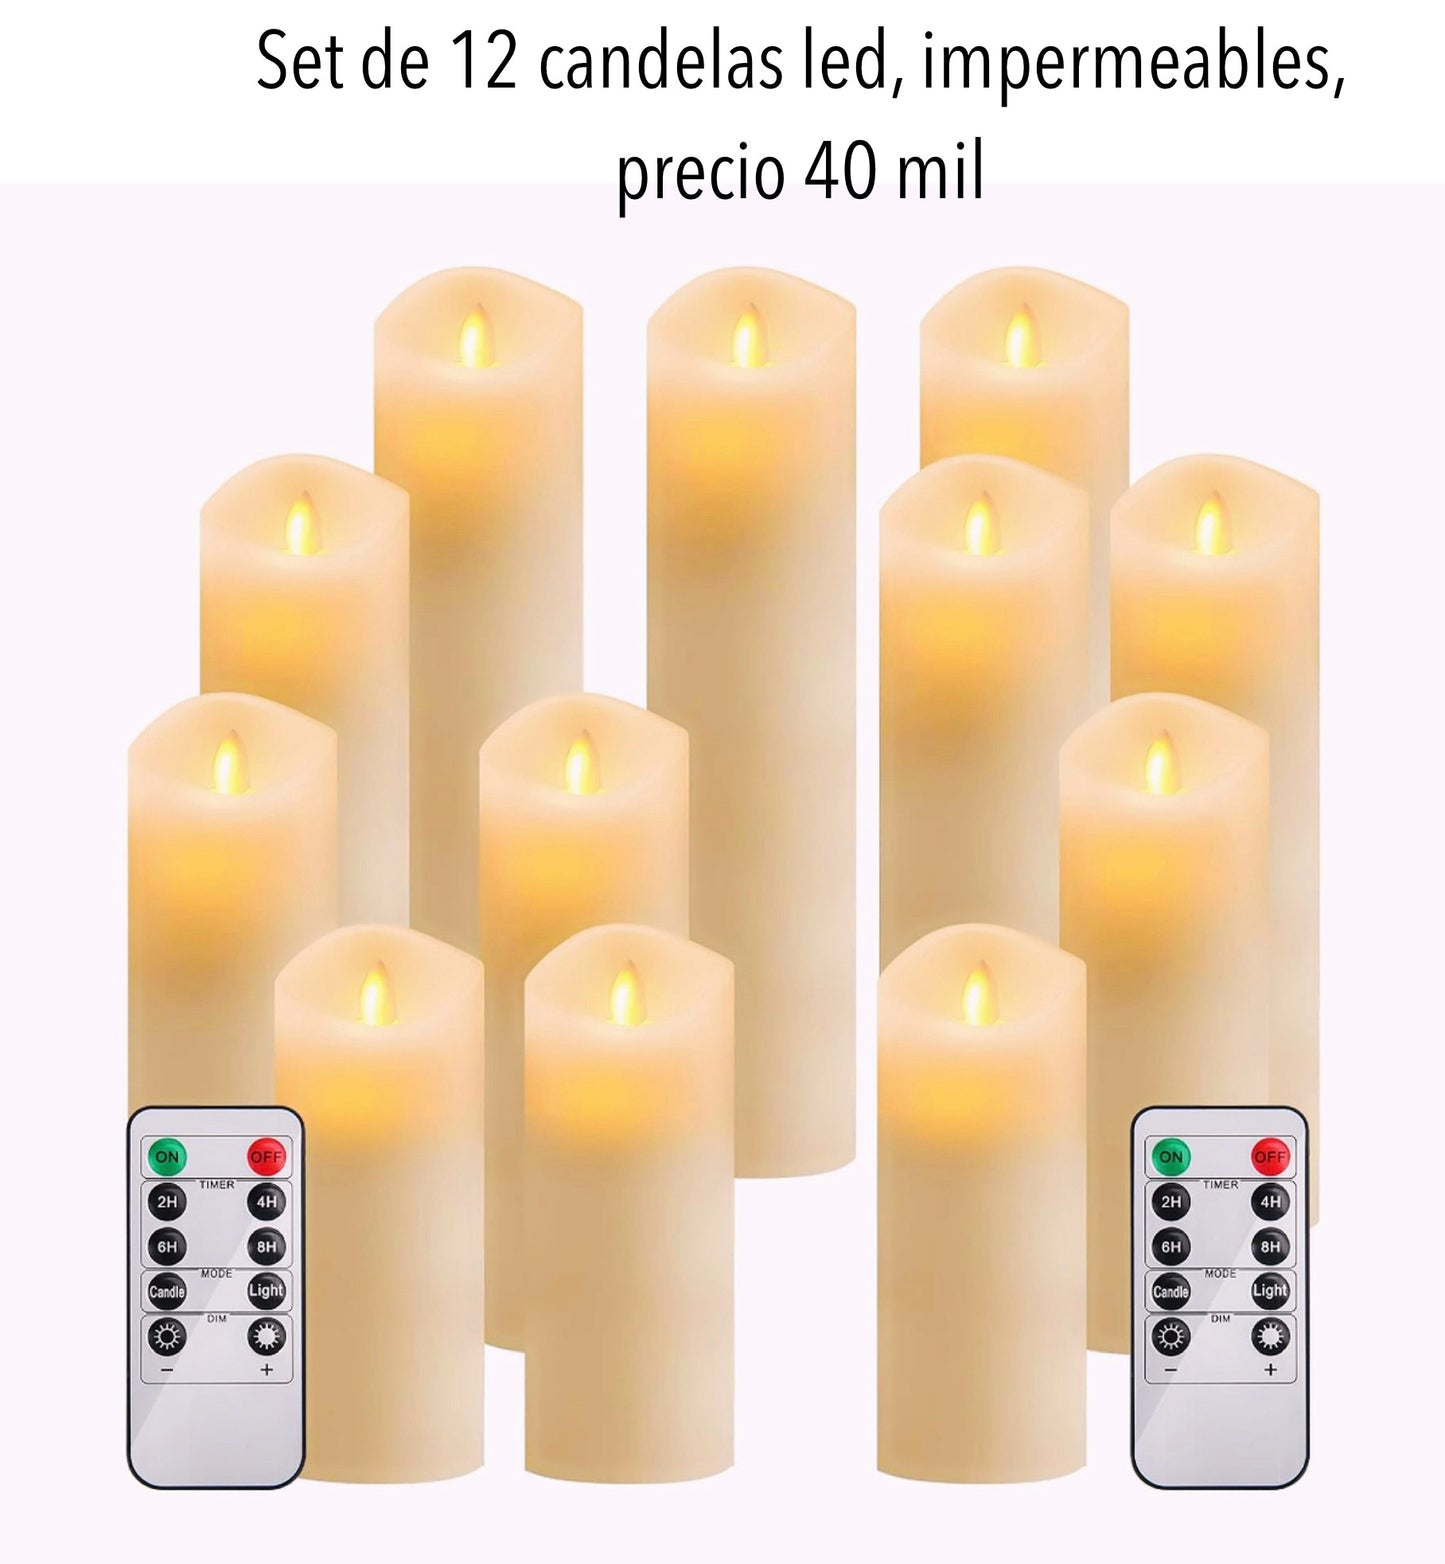 Set de 12 candelas LED y impermeables